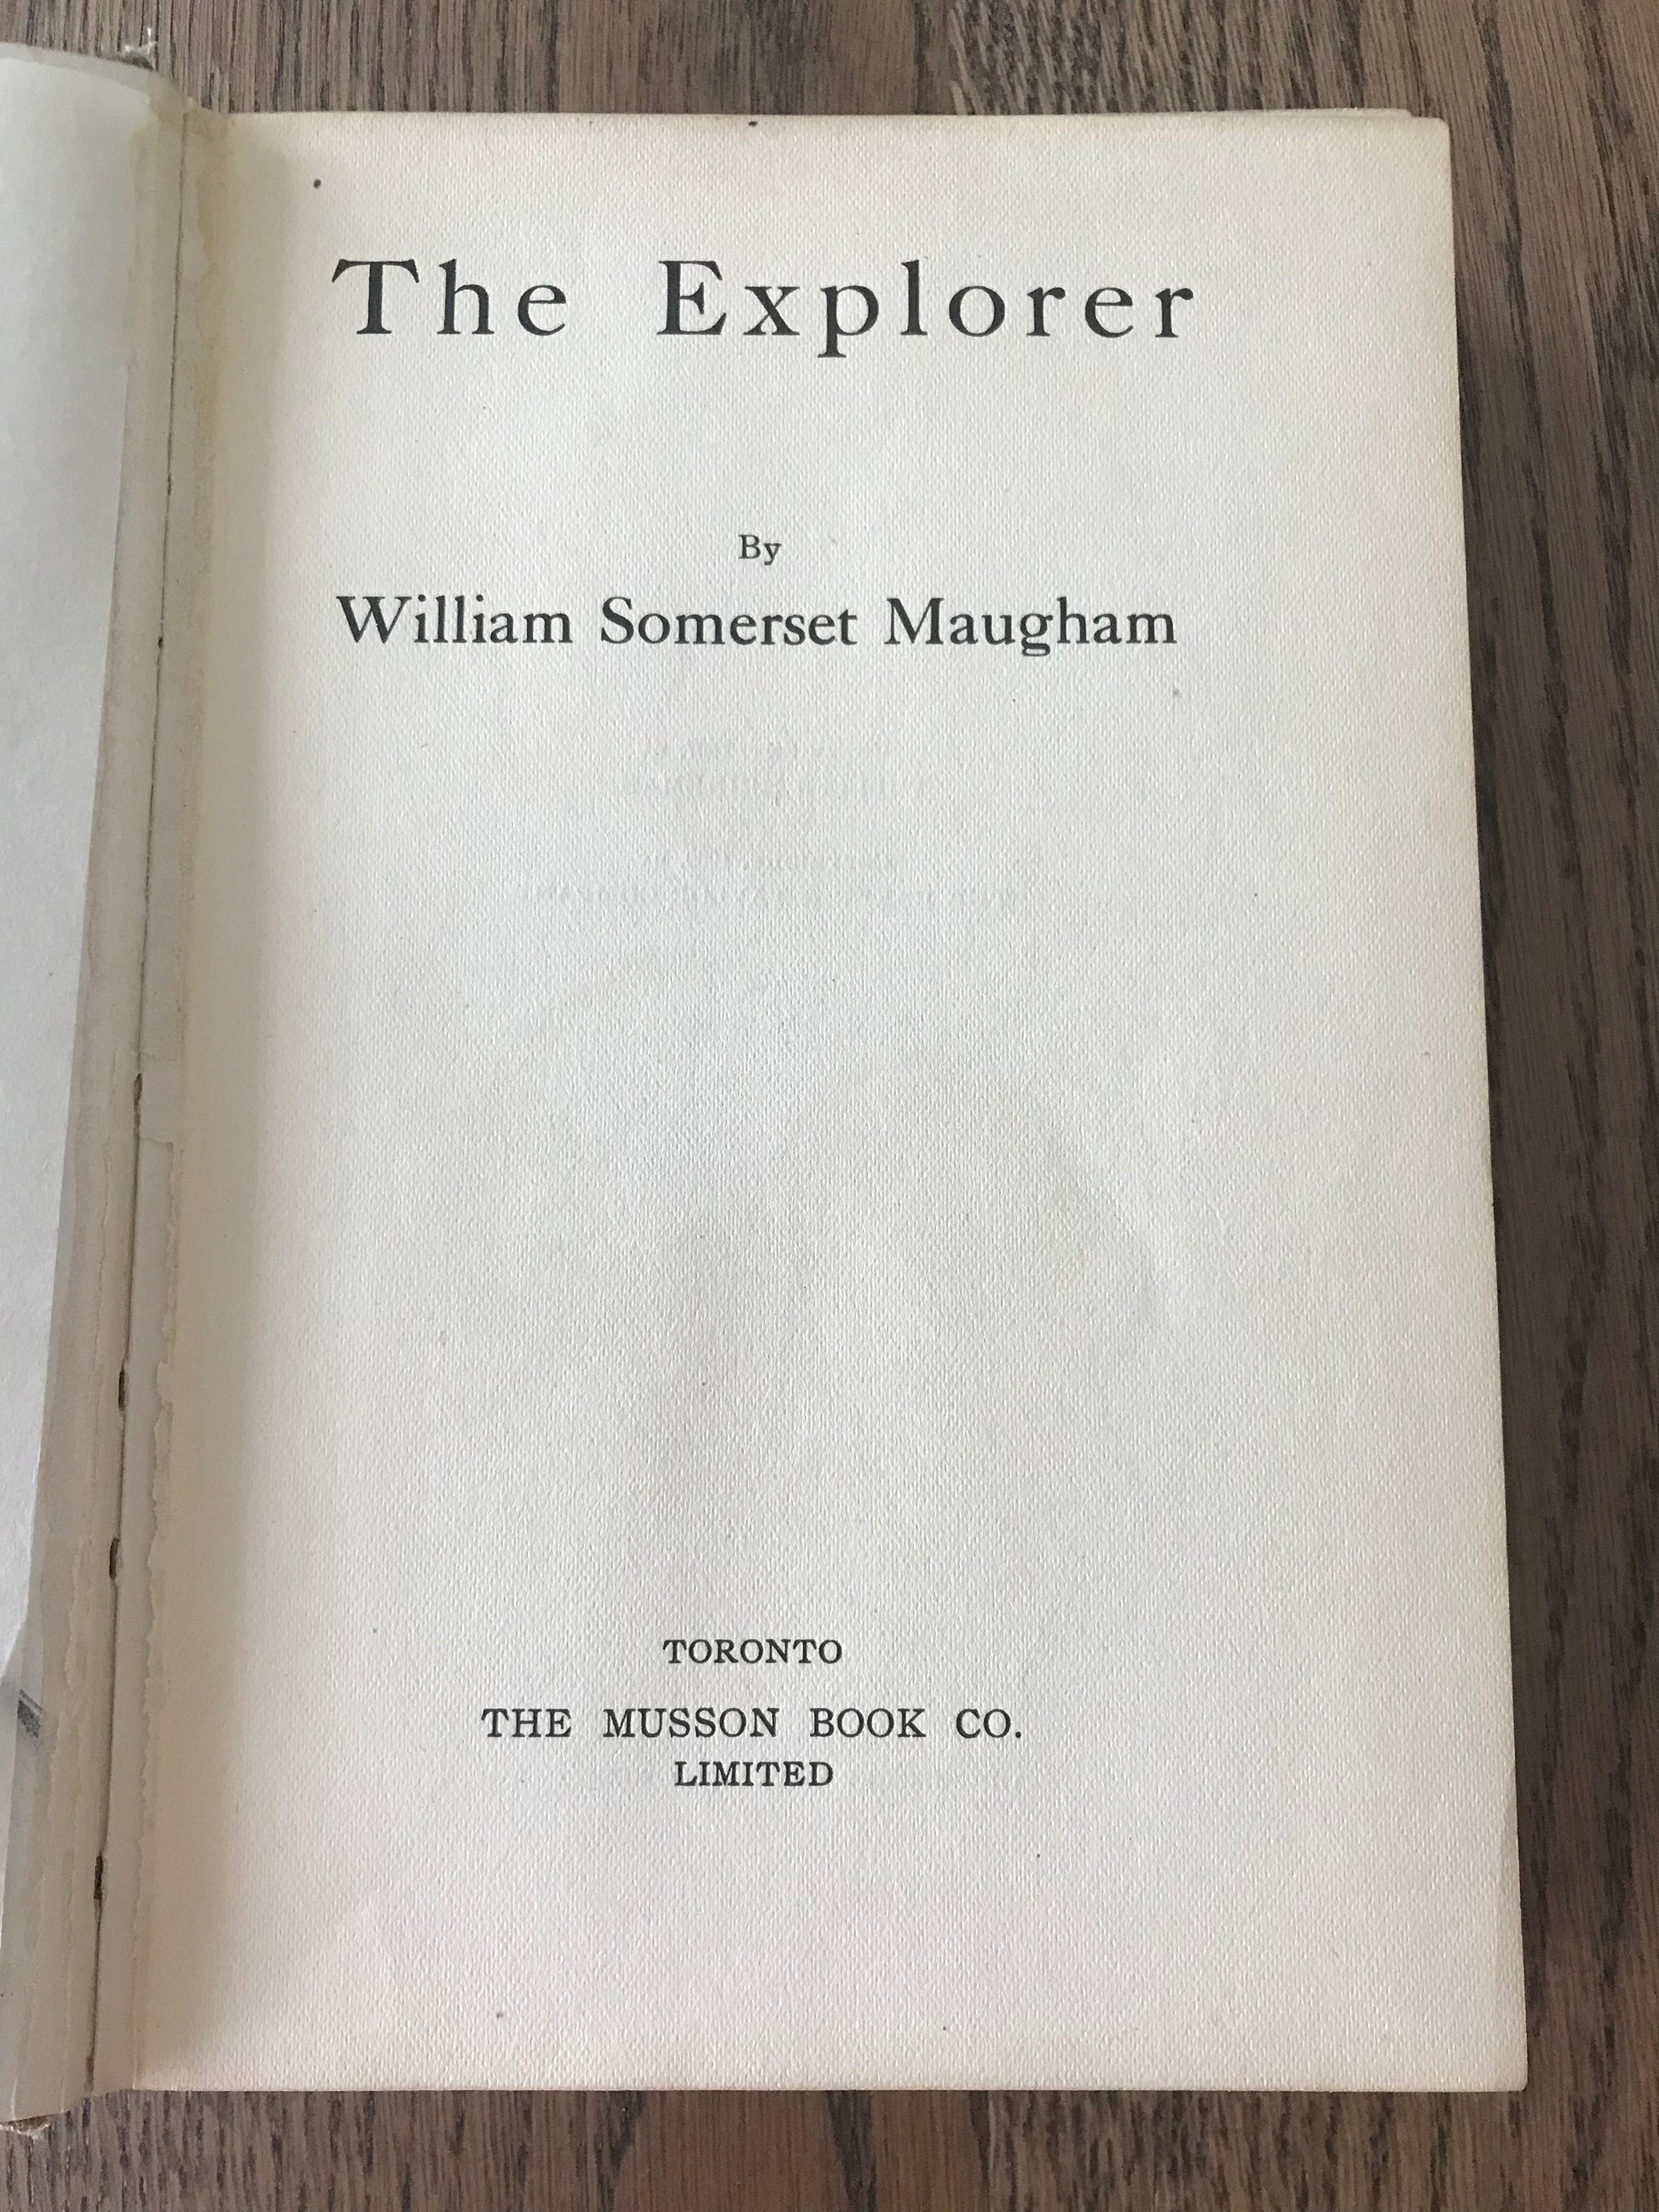 THE EXPLORER - WILLIAM SOMERSET MAUGHAM BooksCardsNBikes